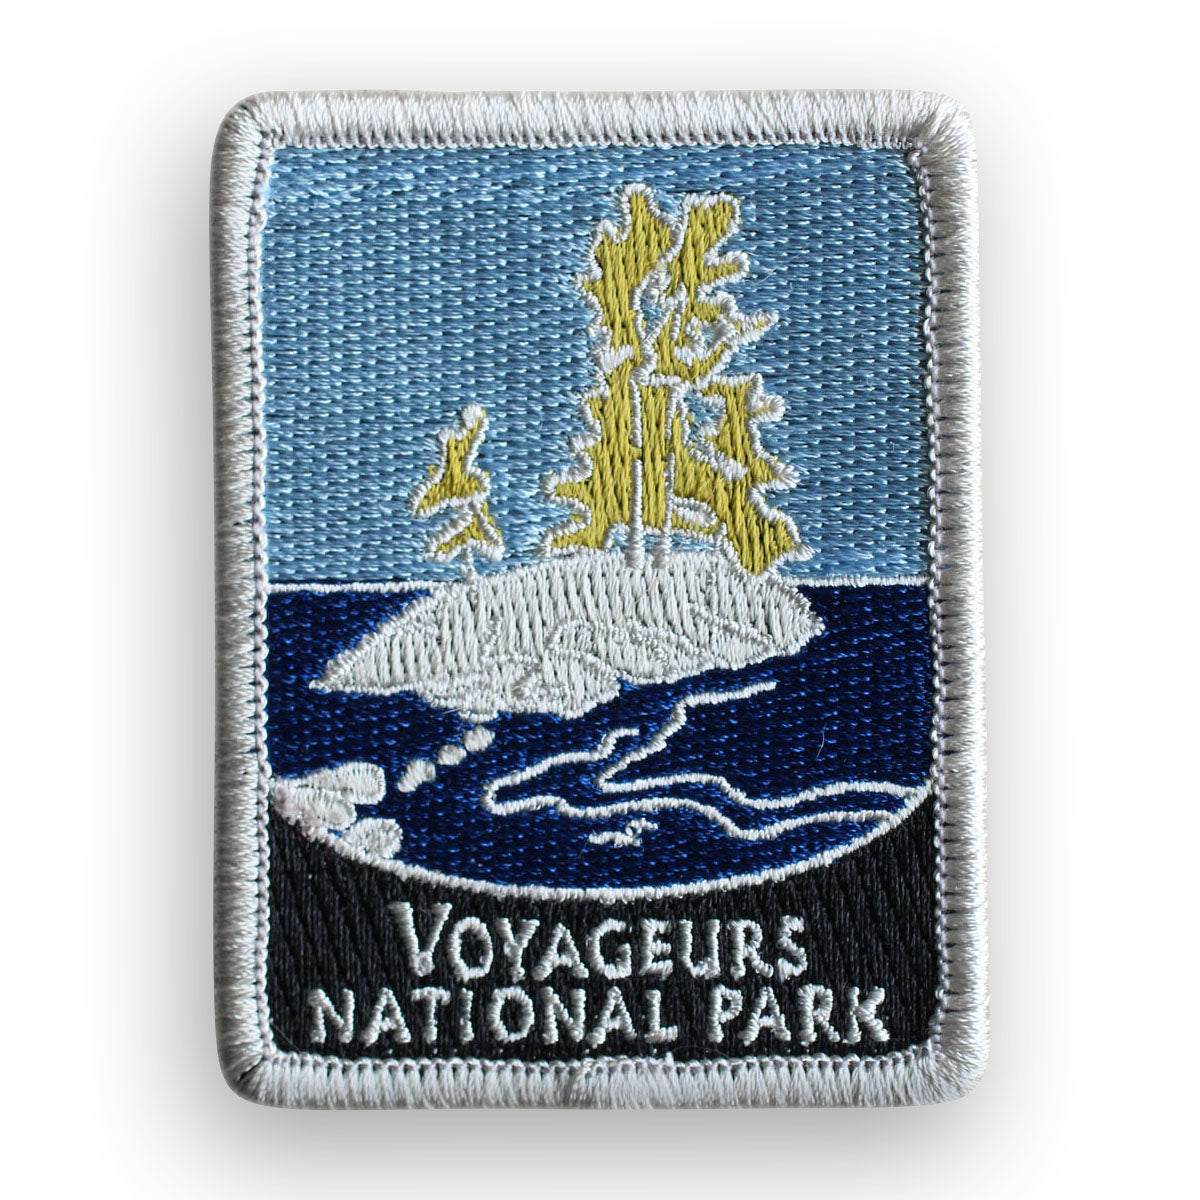 Voyageurs National Park Traveler Patch